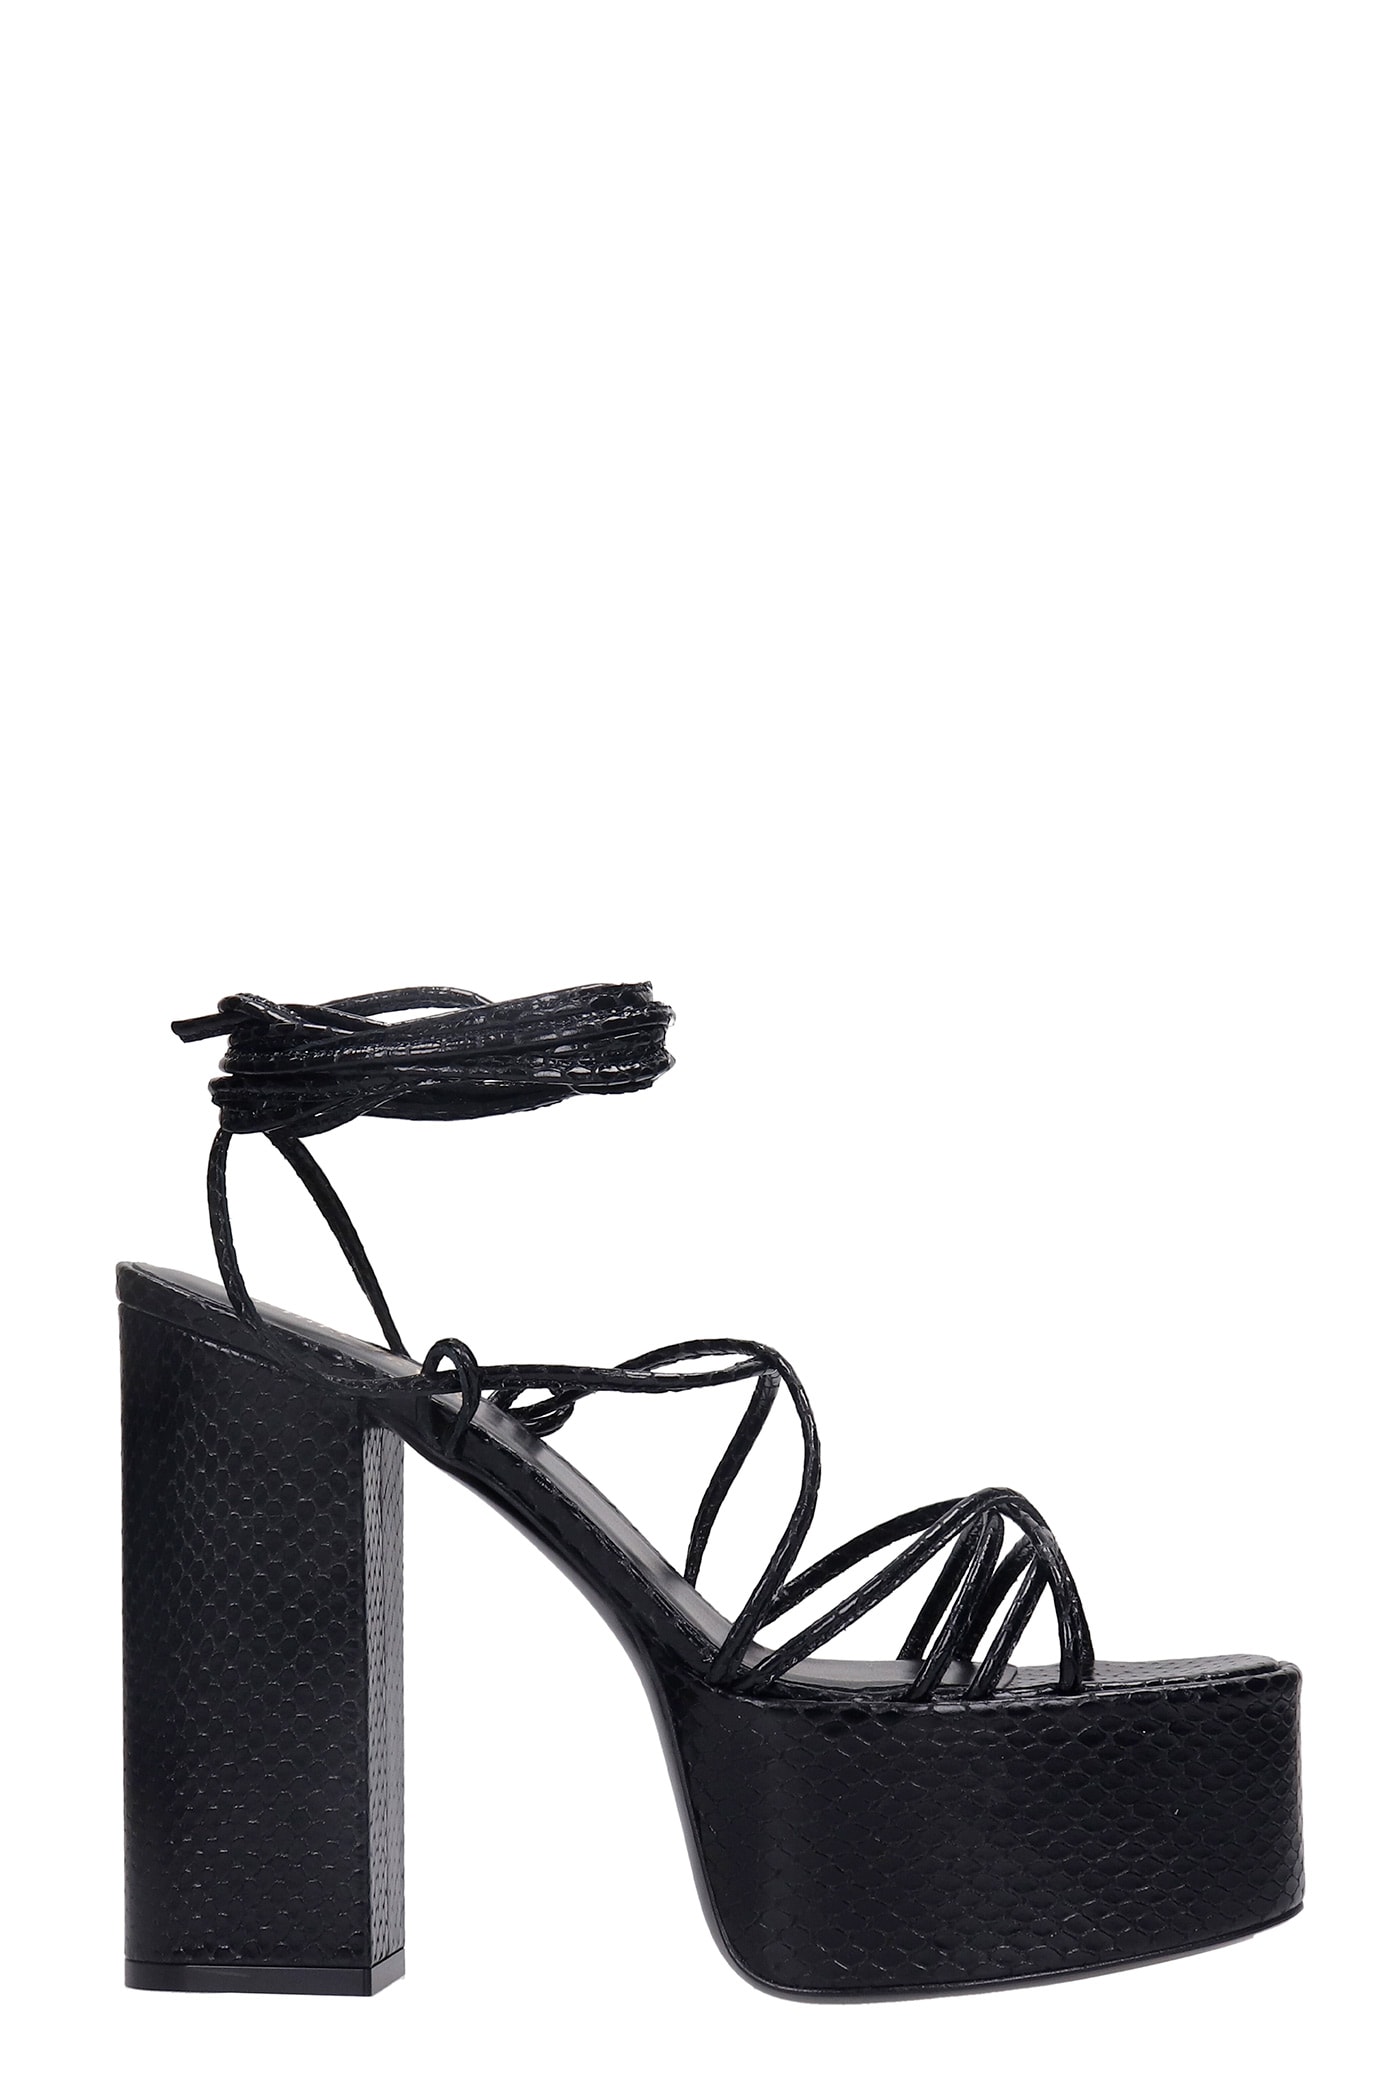 Paris Texas Malena Sandals In Black Leather